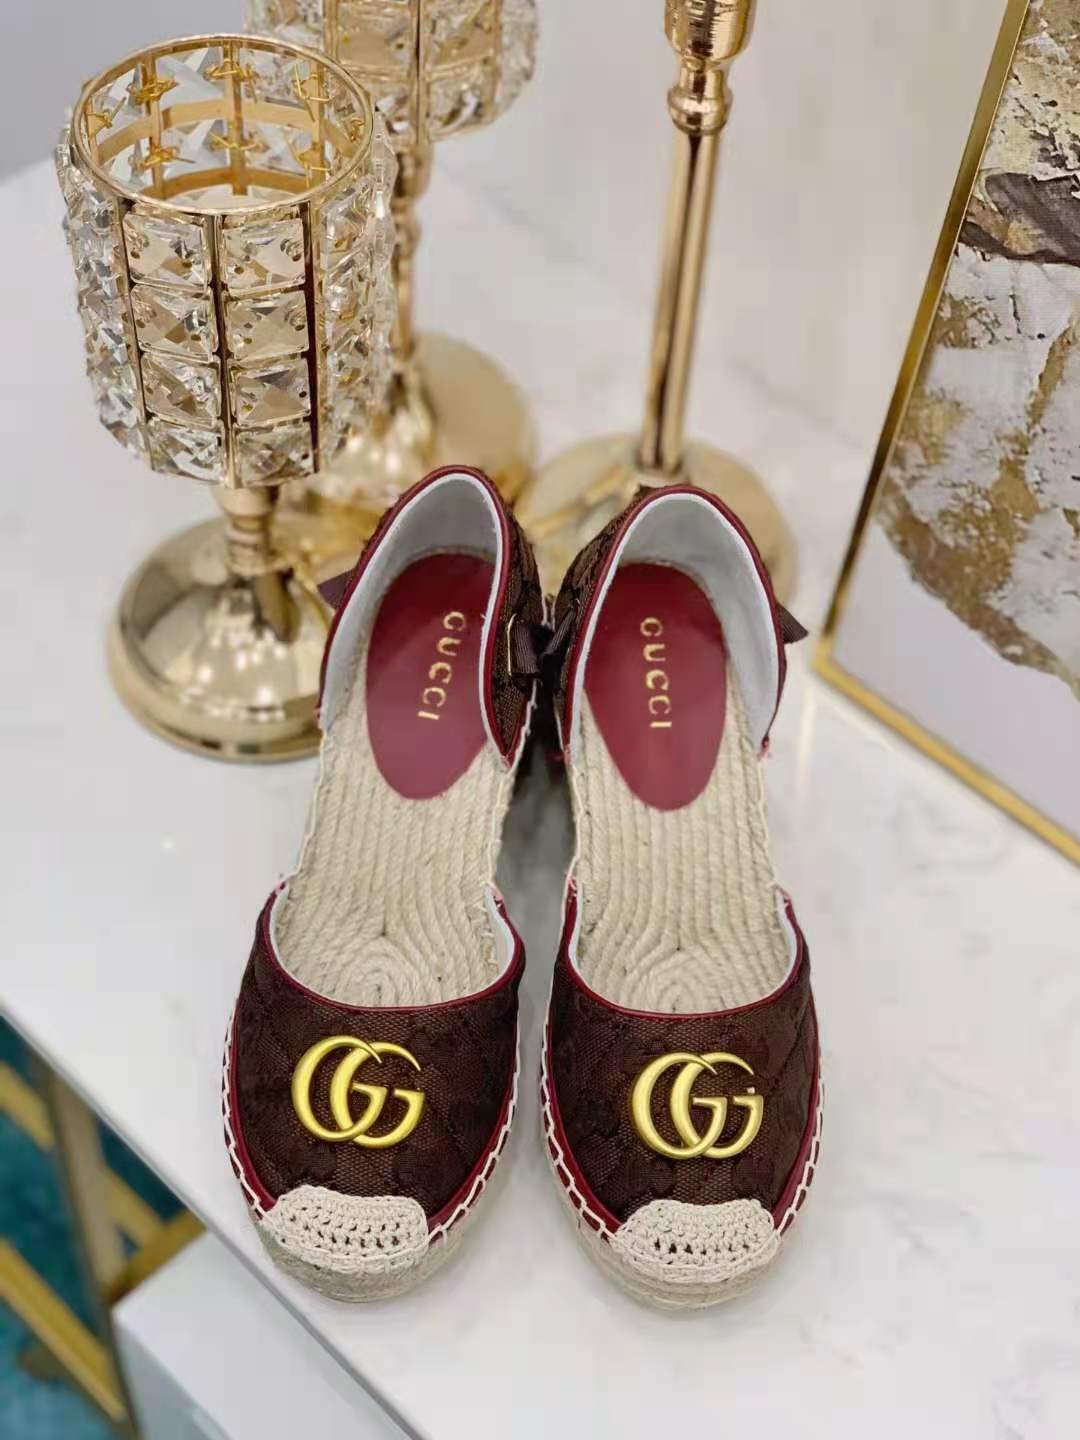 Women's Shoes Gg Sandals Espadrilles Wedges Platform Quilted Canvas ...